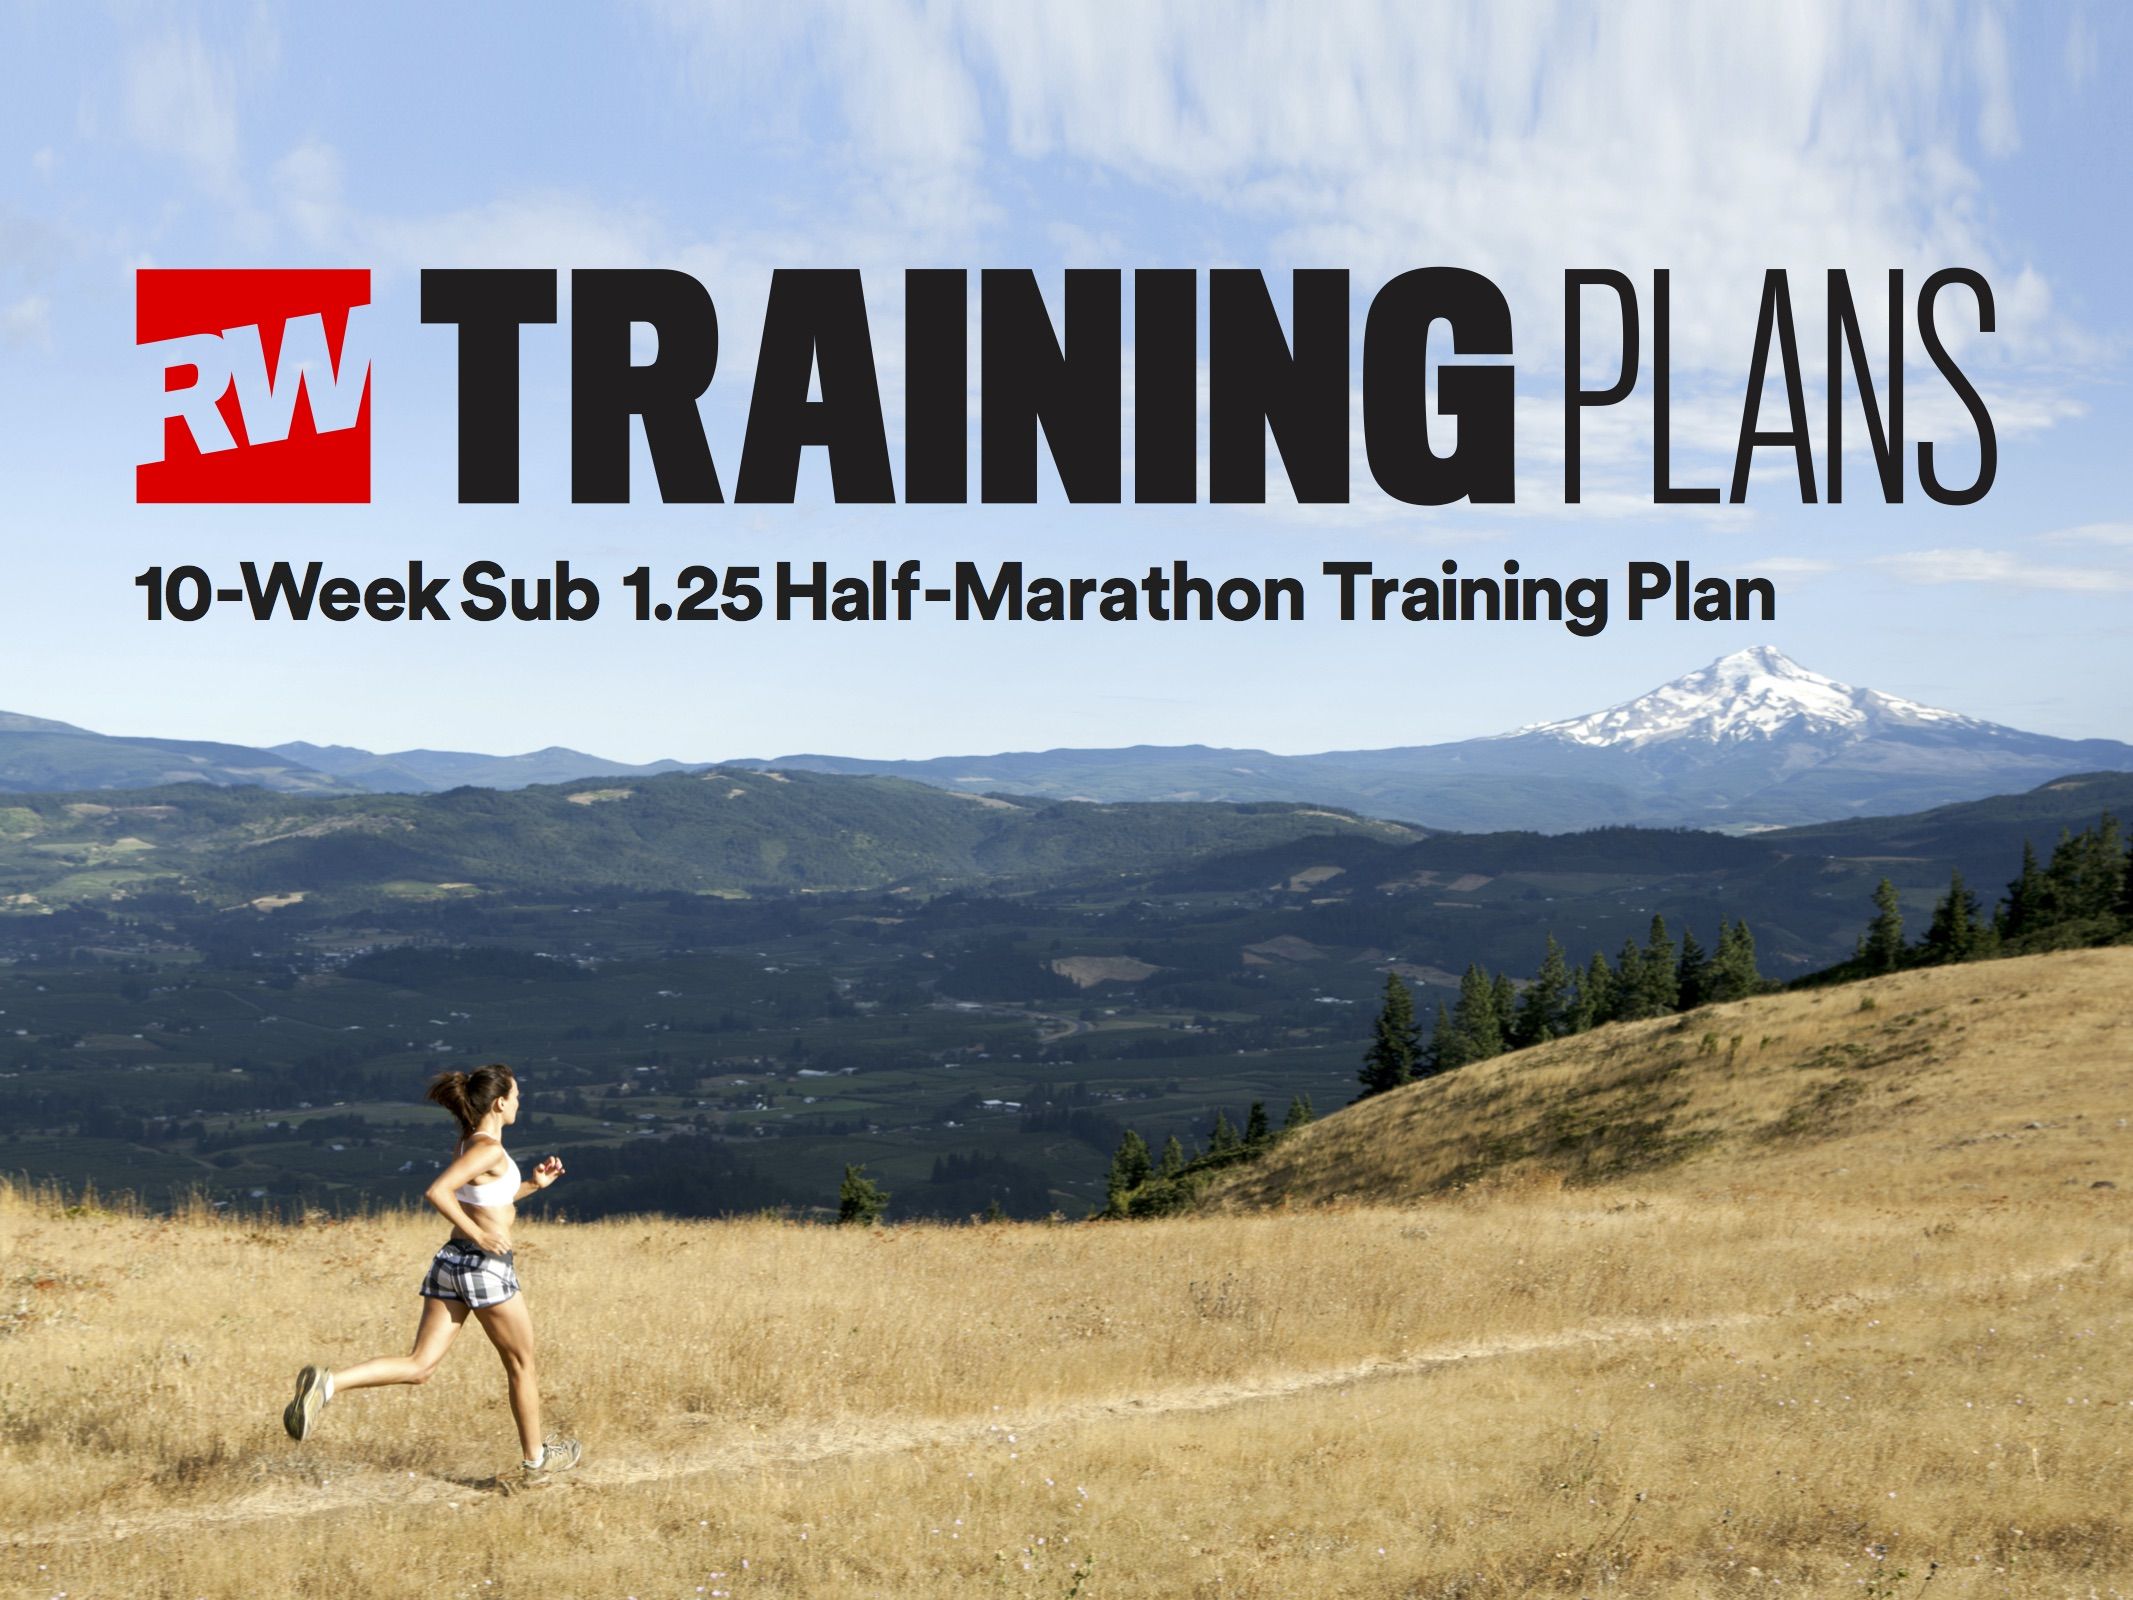 16-week marathon training plan for runners looking to run sub 4